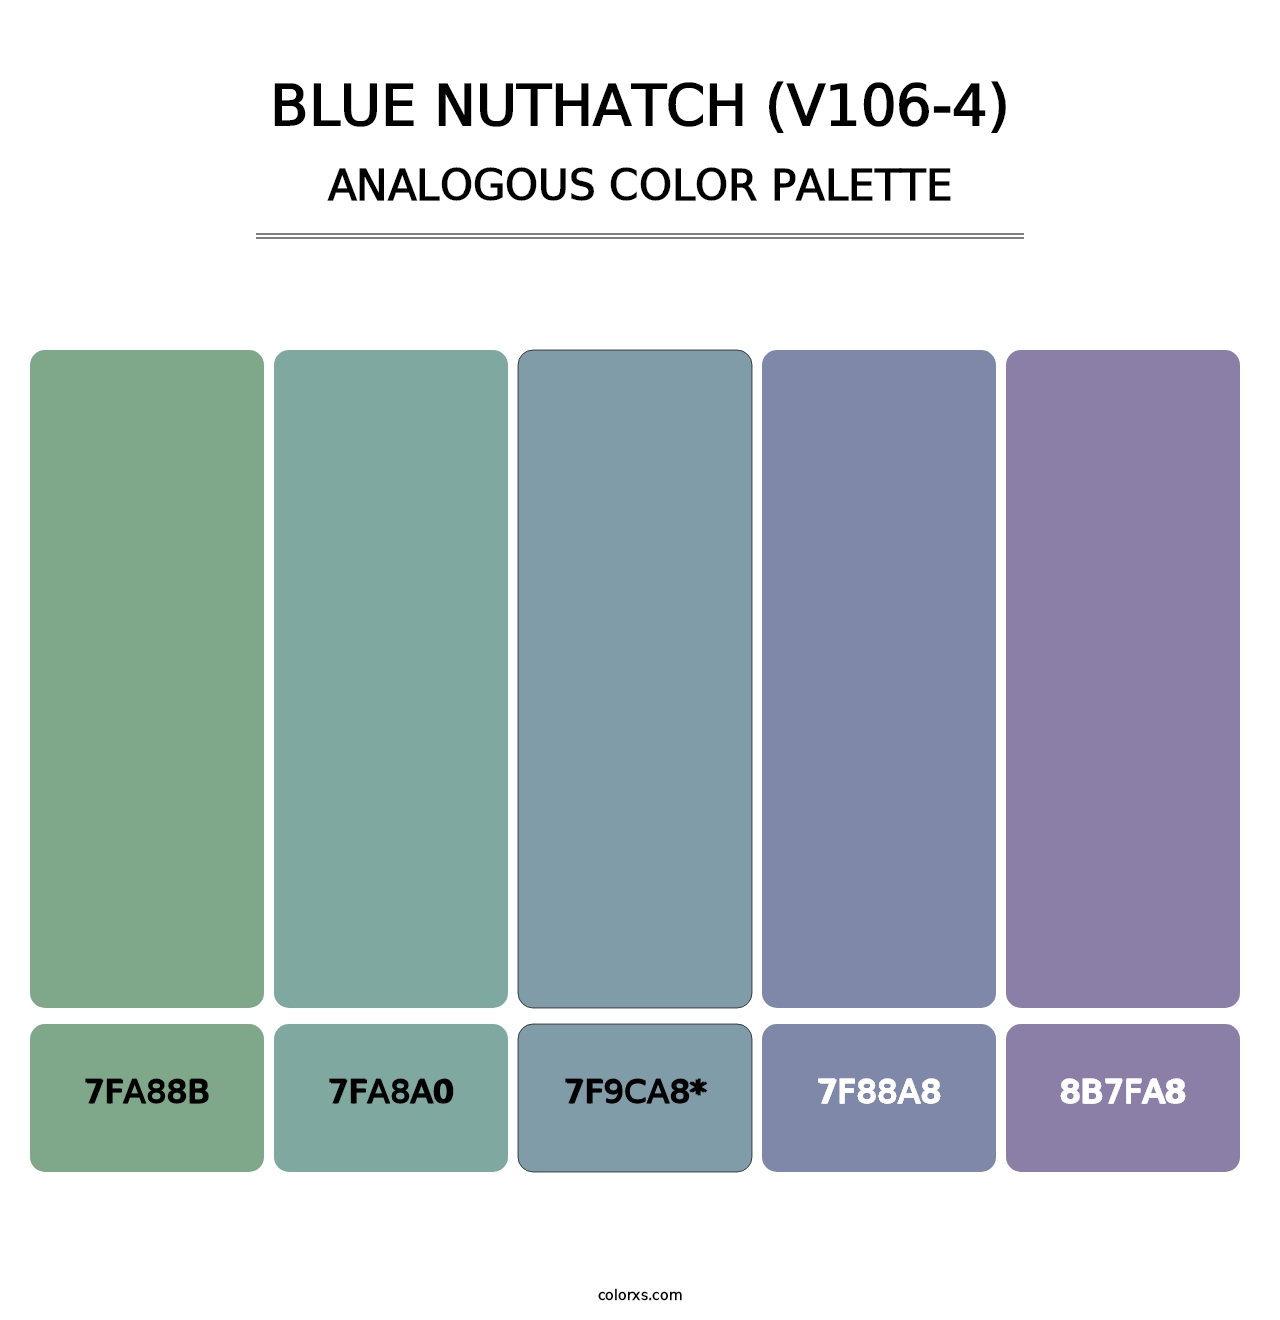 Blue Nuthatch (V106-4) - Analogous Color Palette